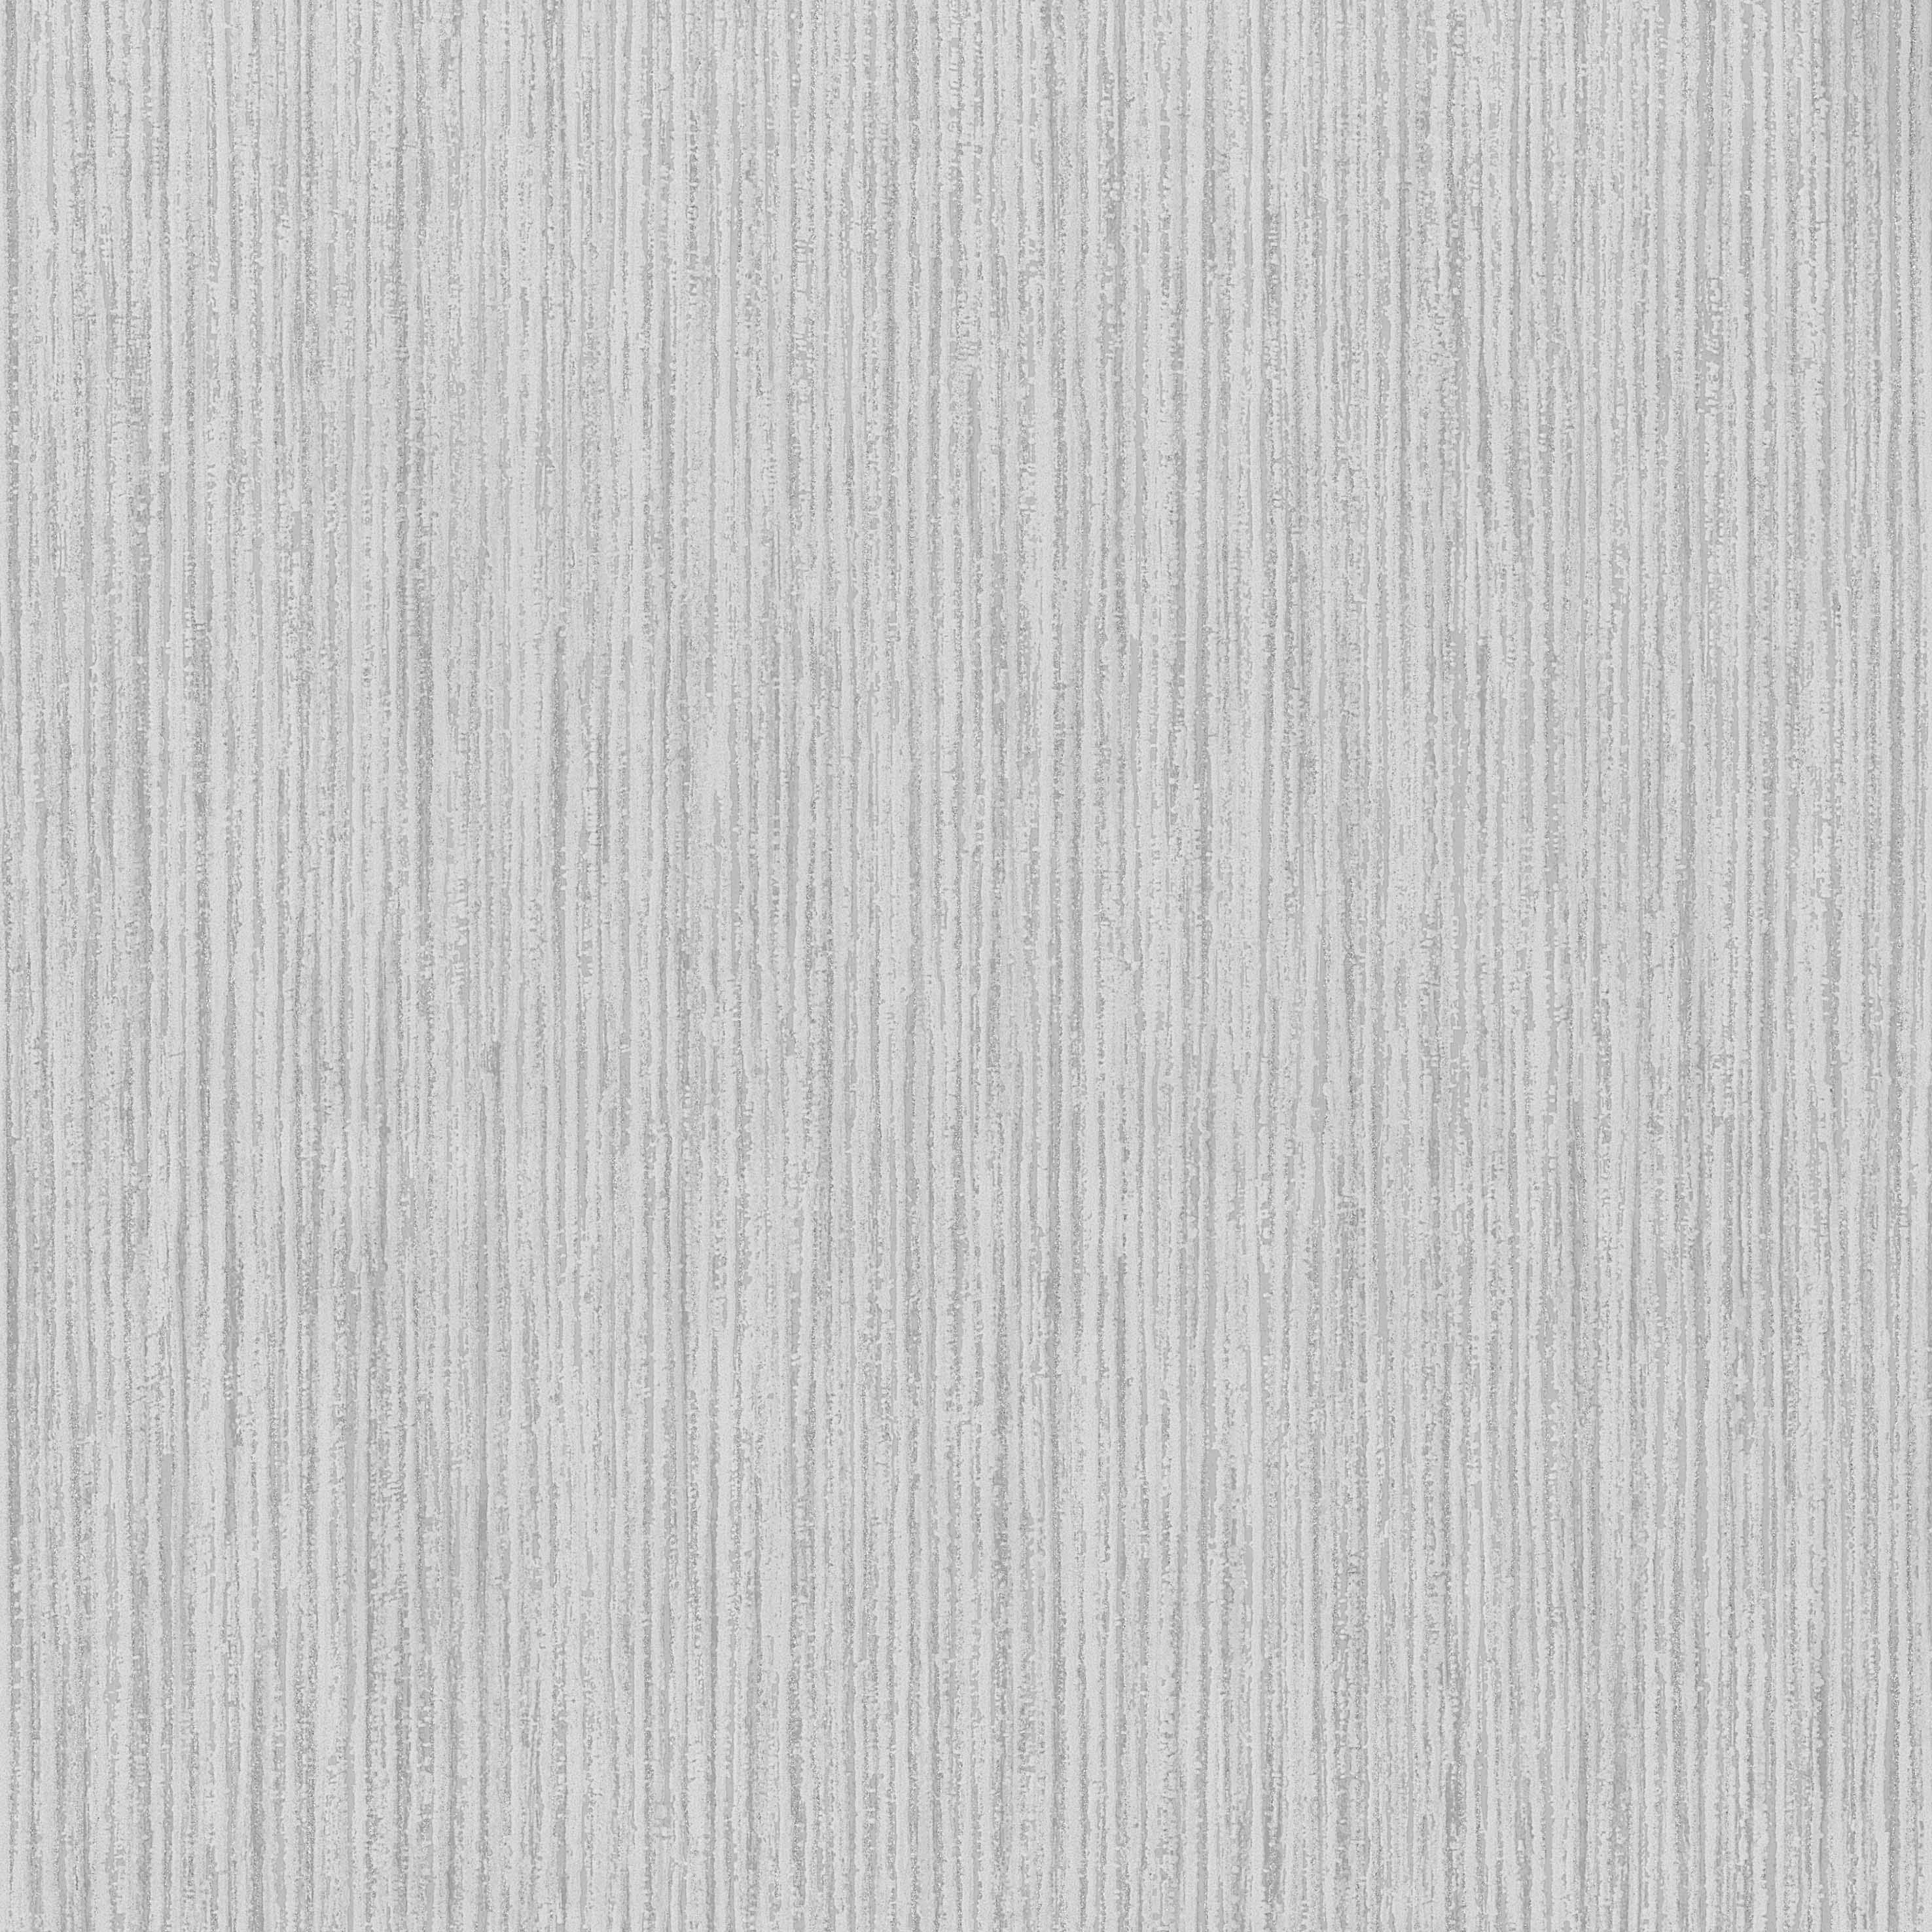 Free download Grey Textured Wallpaper Silver birch texture grey 